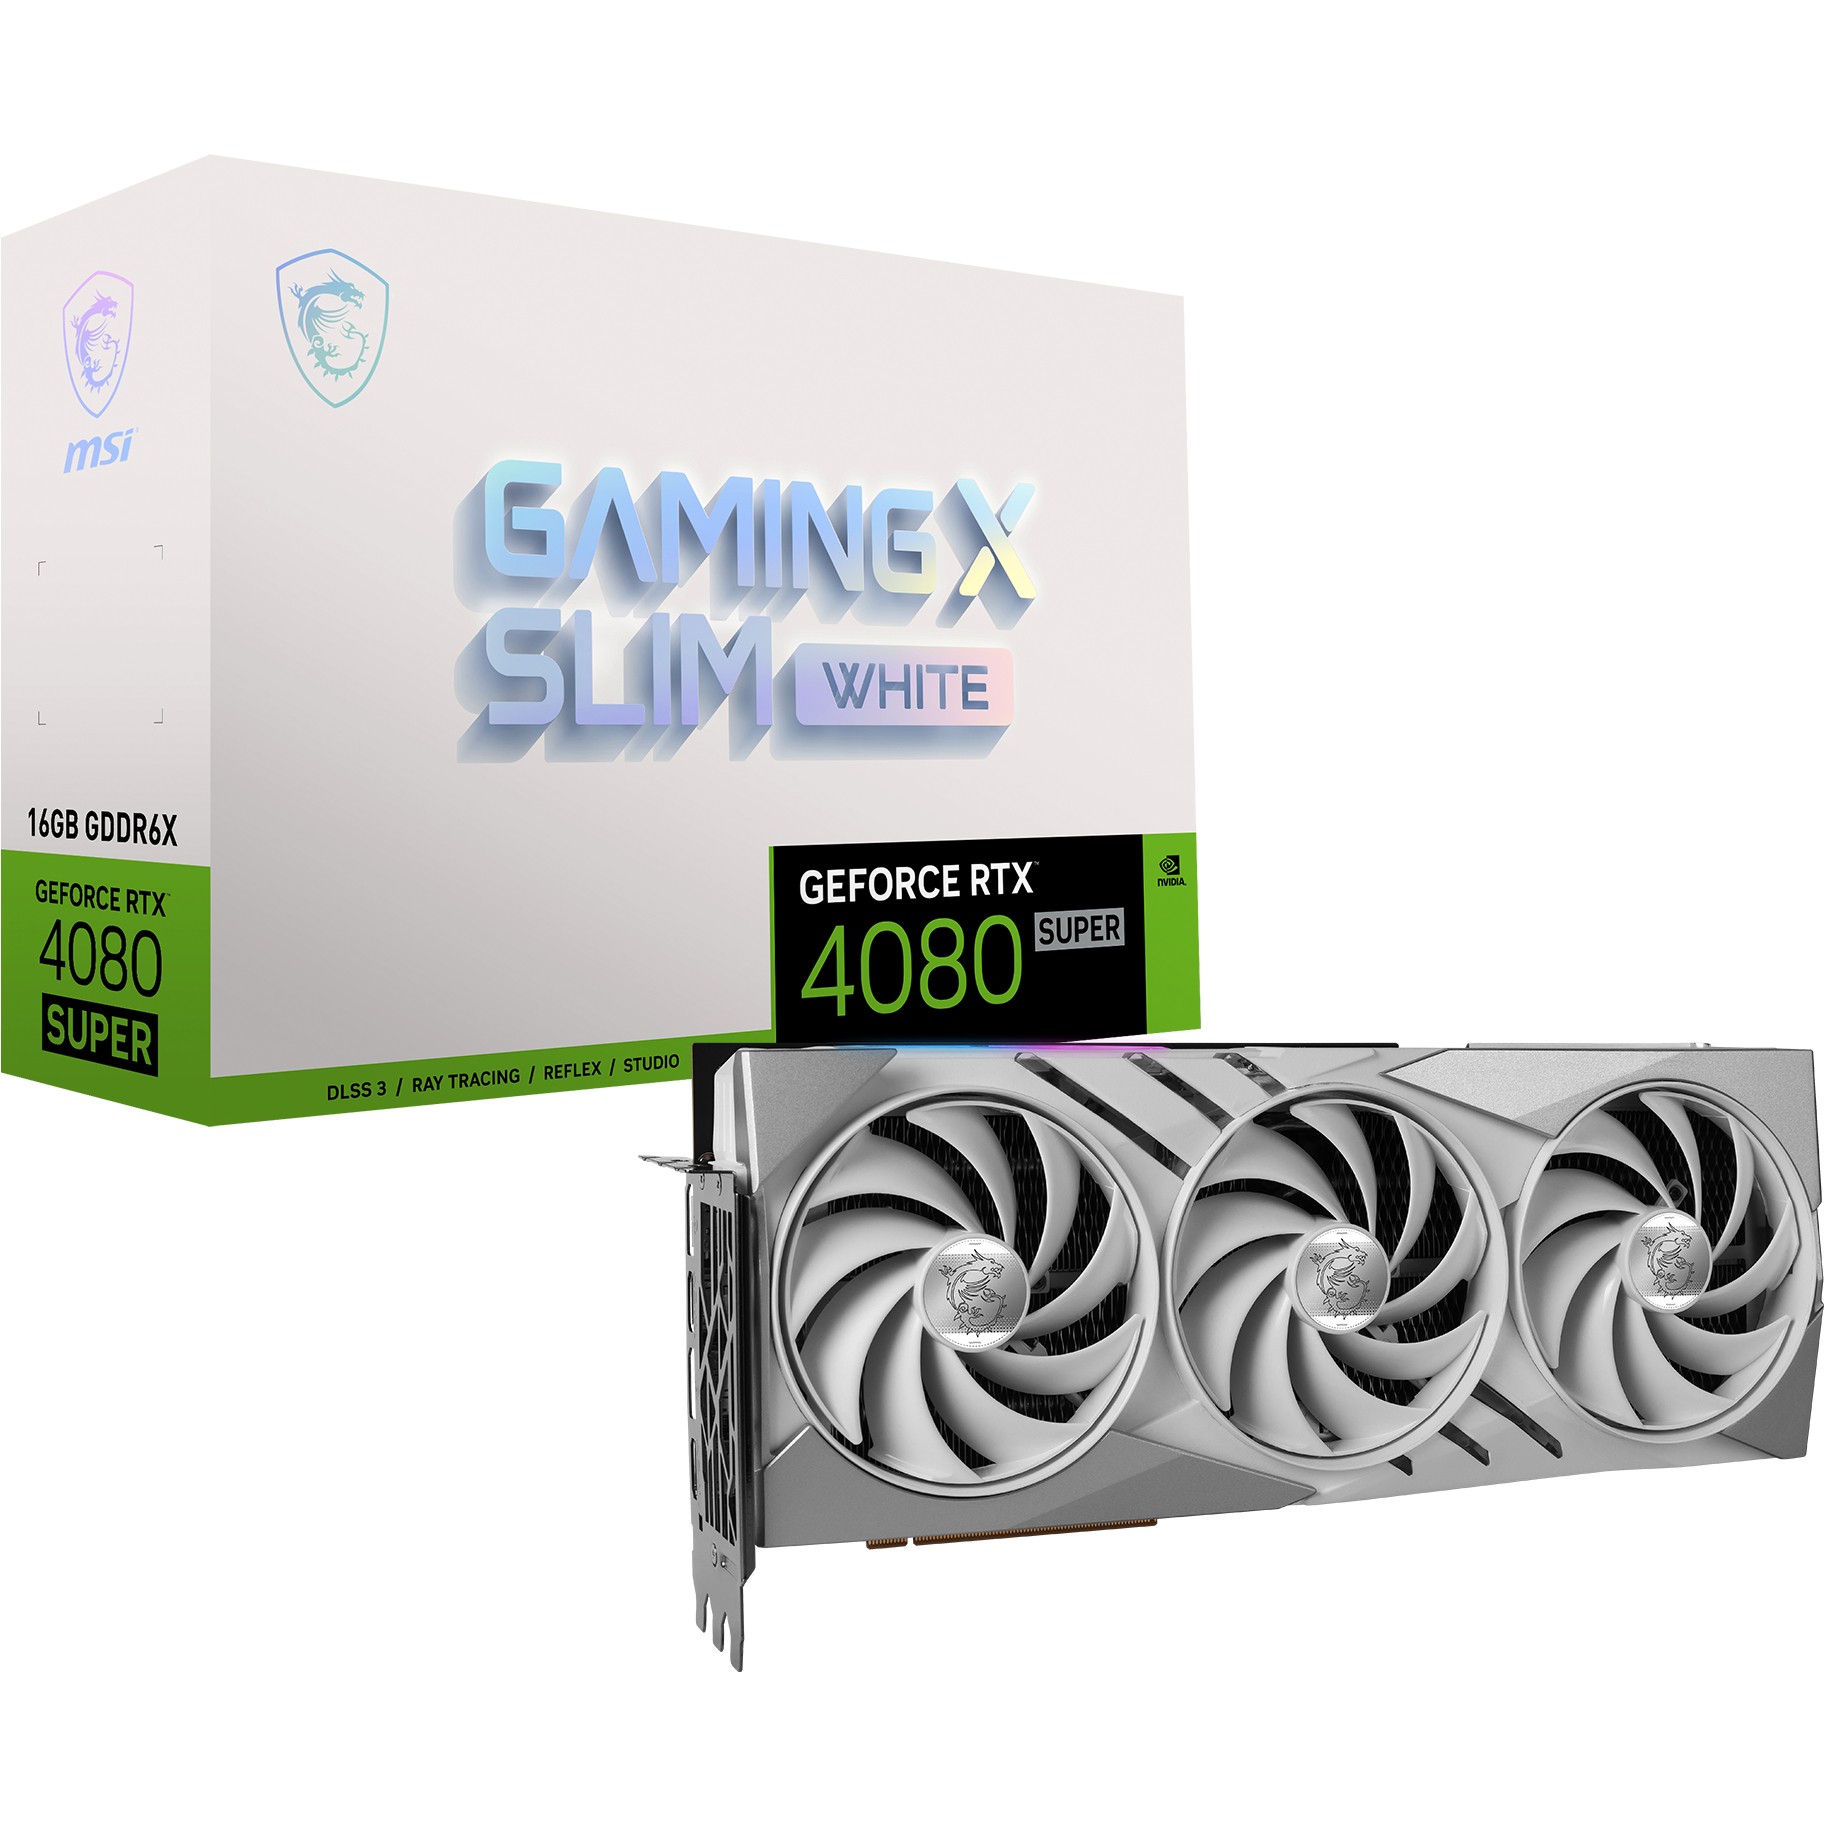 MSI GeForce RTX 4080 SUPER 16G GAMING X SLIM WHITE - V511-220R